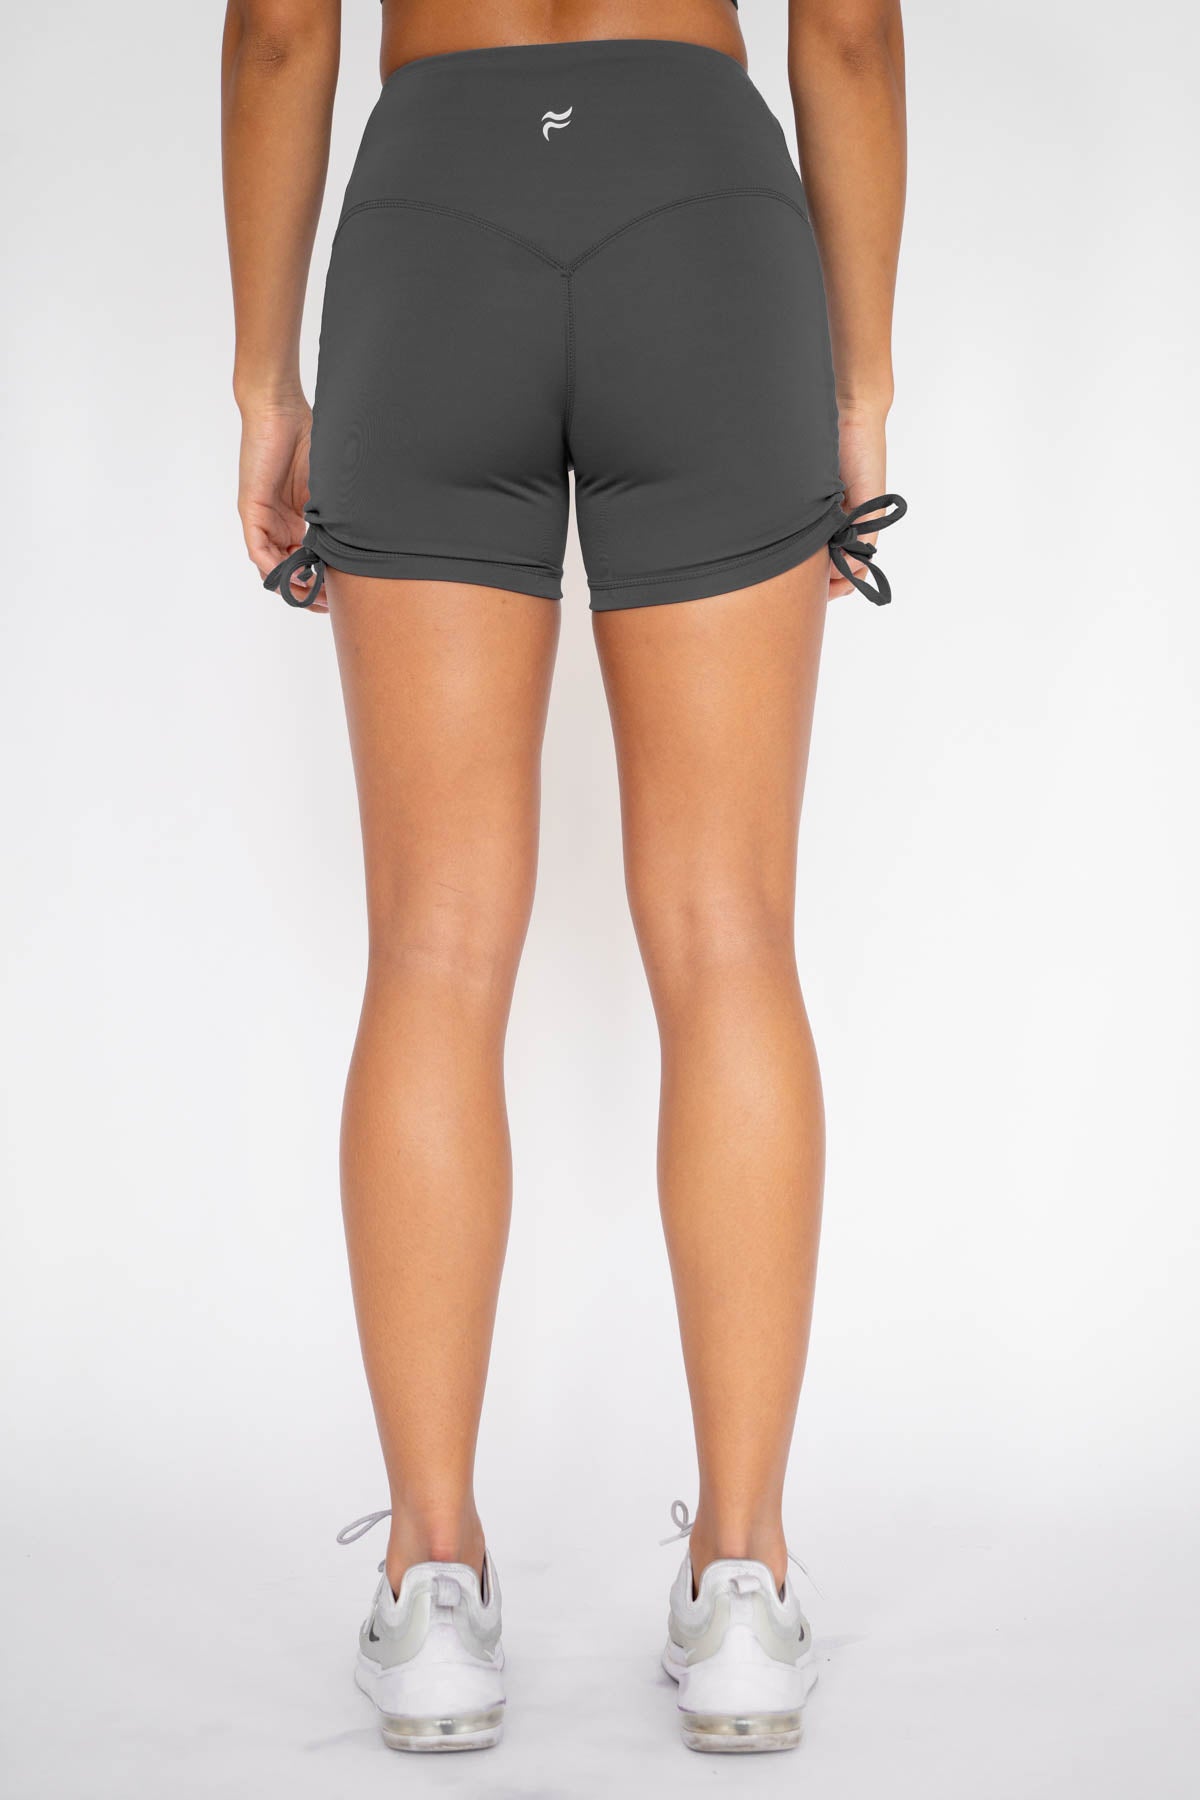 Isla Drawstring Shorts Charcoal Grey XS S M L XL